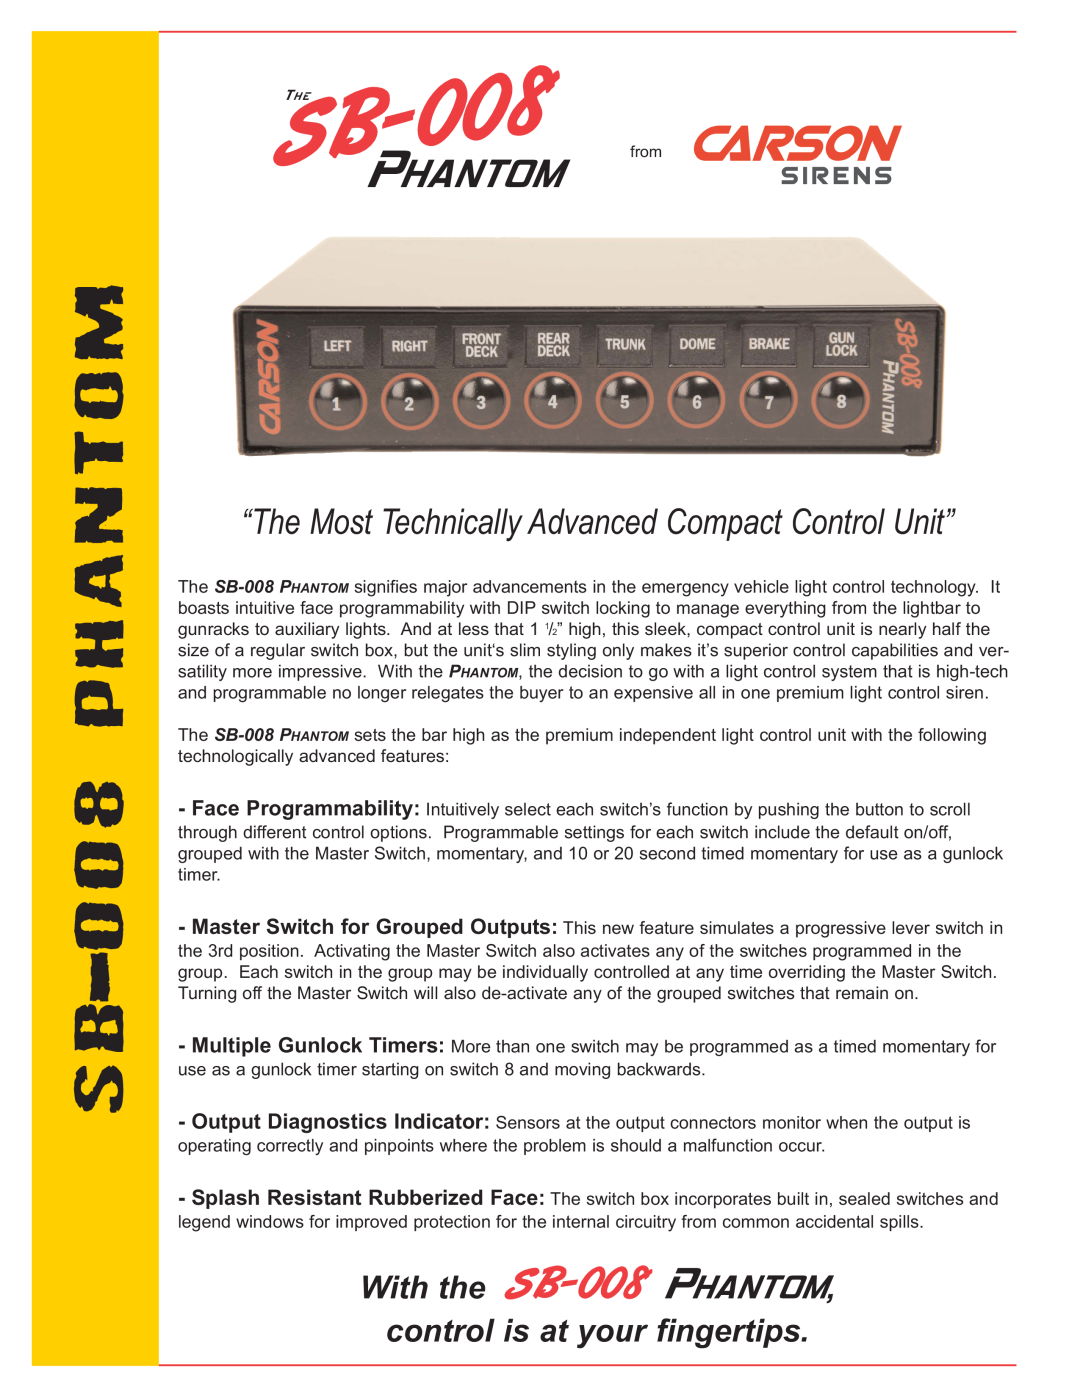 Carson SB-008 manual Phantom, “The Most Technically Advanced Compact Control Unit” 